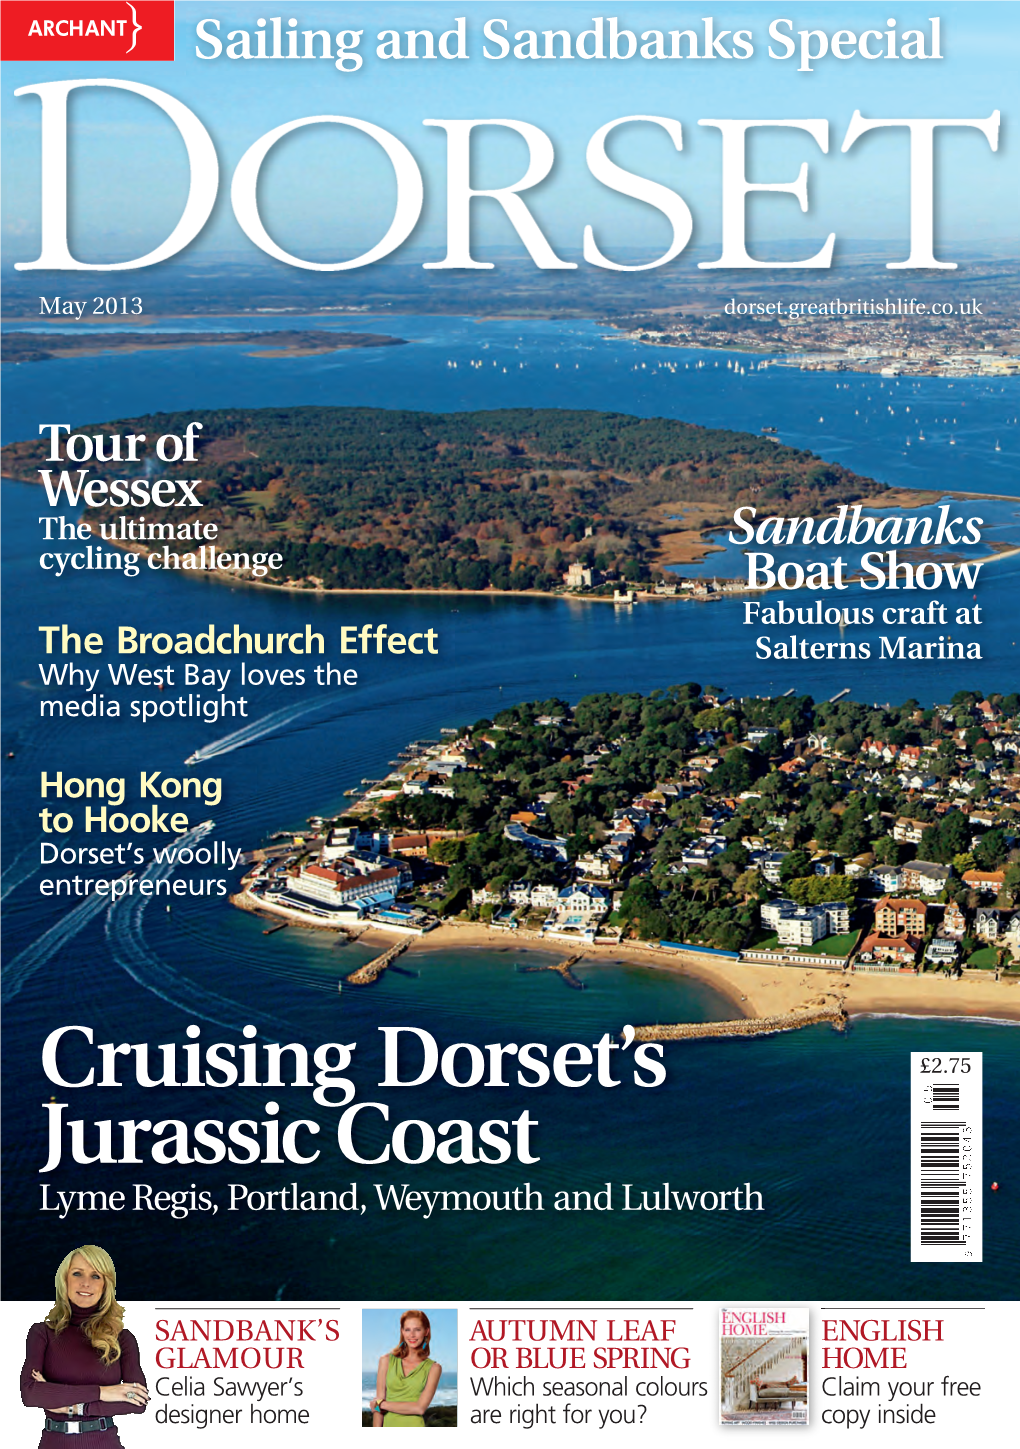 Cruising Dorset's Jurassic Coast